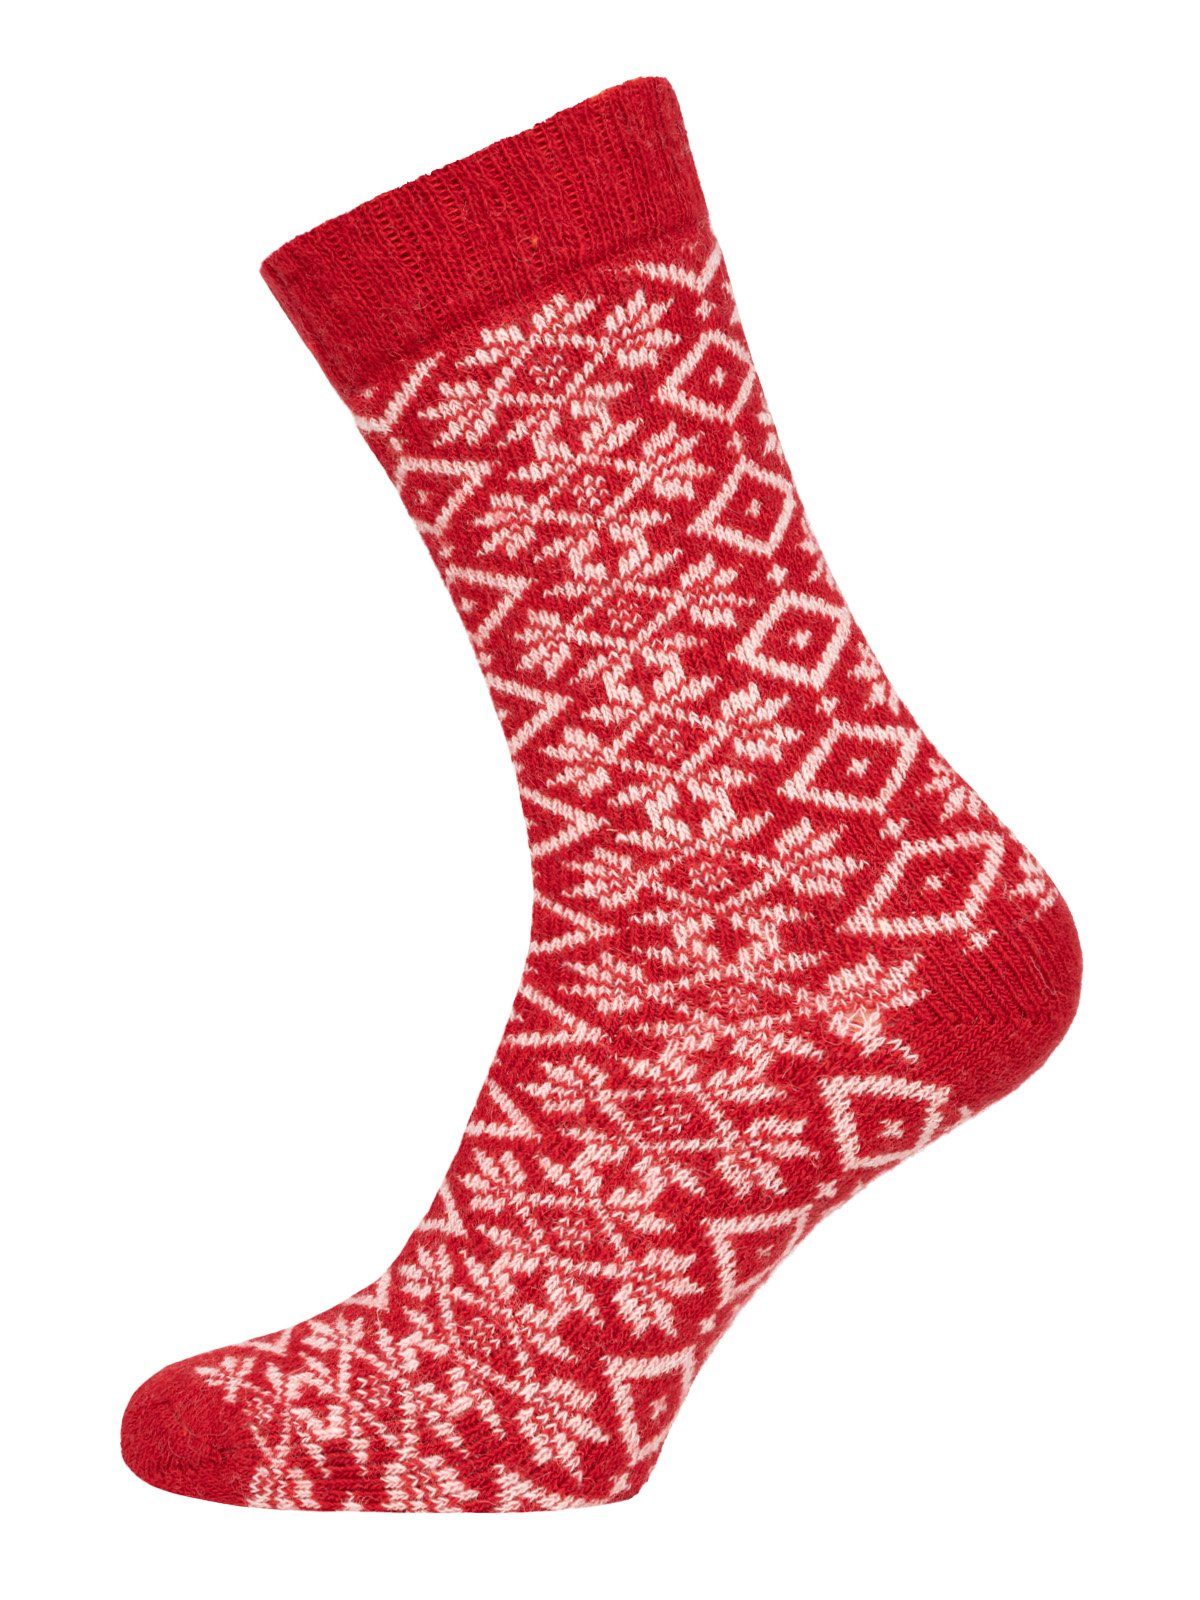 HomeOfSocks Socken Hygge Socken Dick Für Herren & Damen mit Wolle Dicke Socken Hyggelig Warm Mit Hohem 45% Wollanteil In Bunten Design Rot